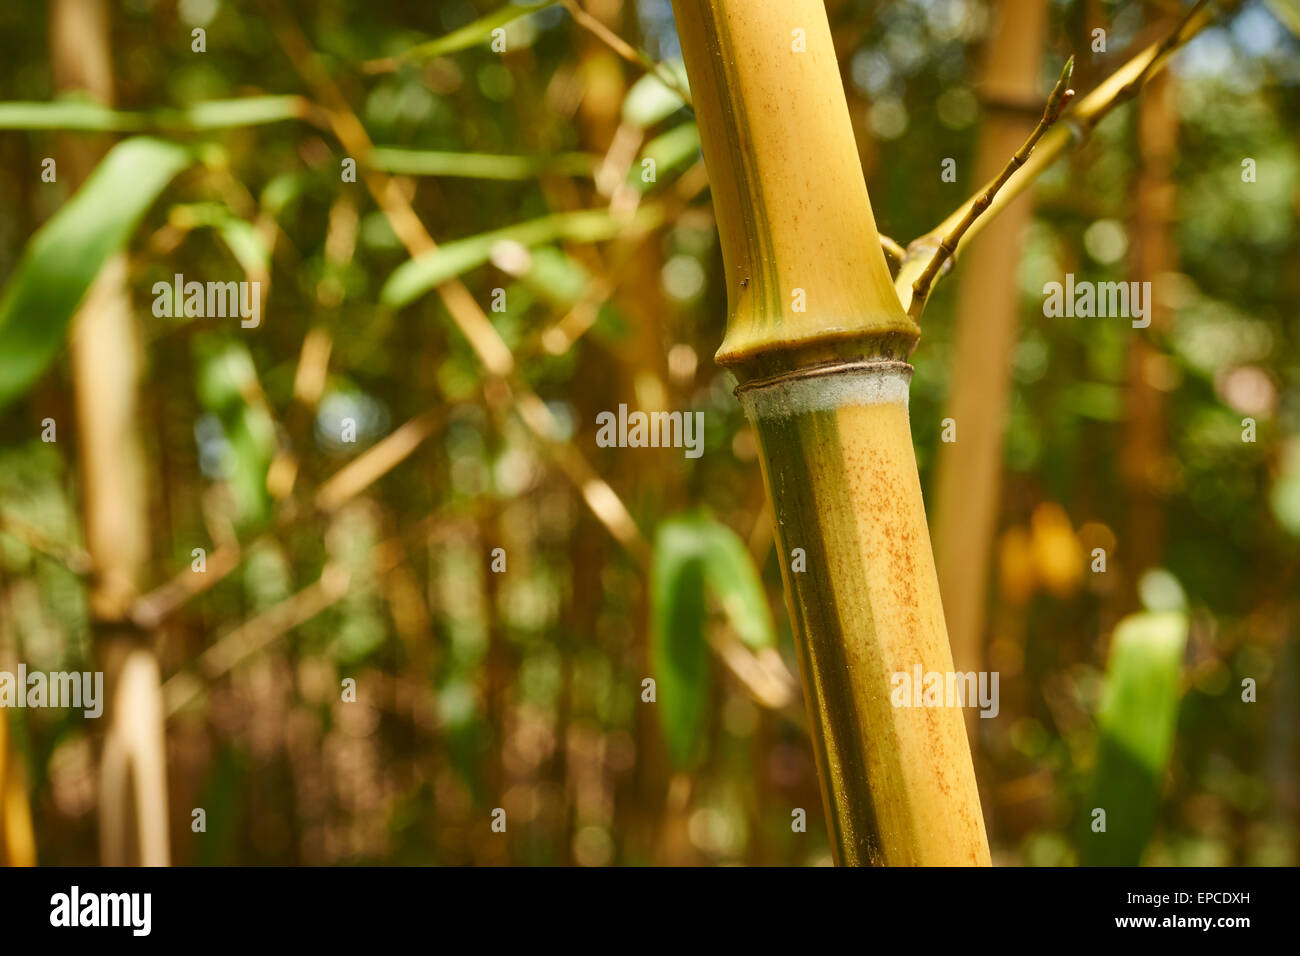 bamboo forest garden, New Brunswick, NJ, USA Stock Photo